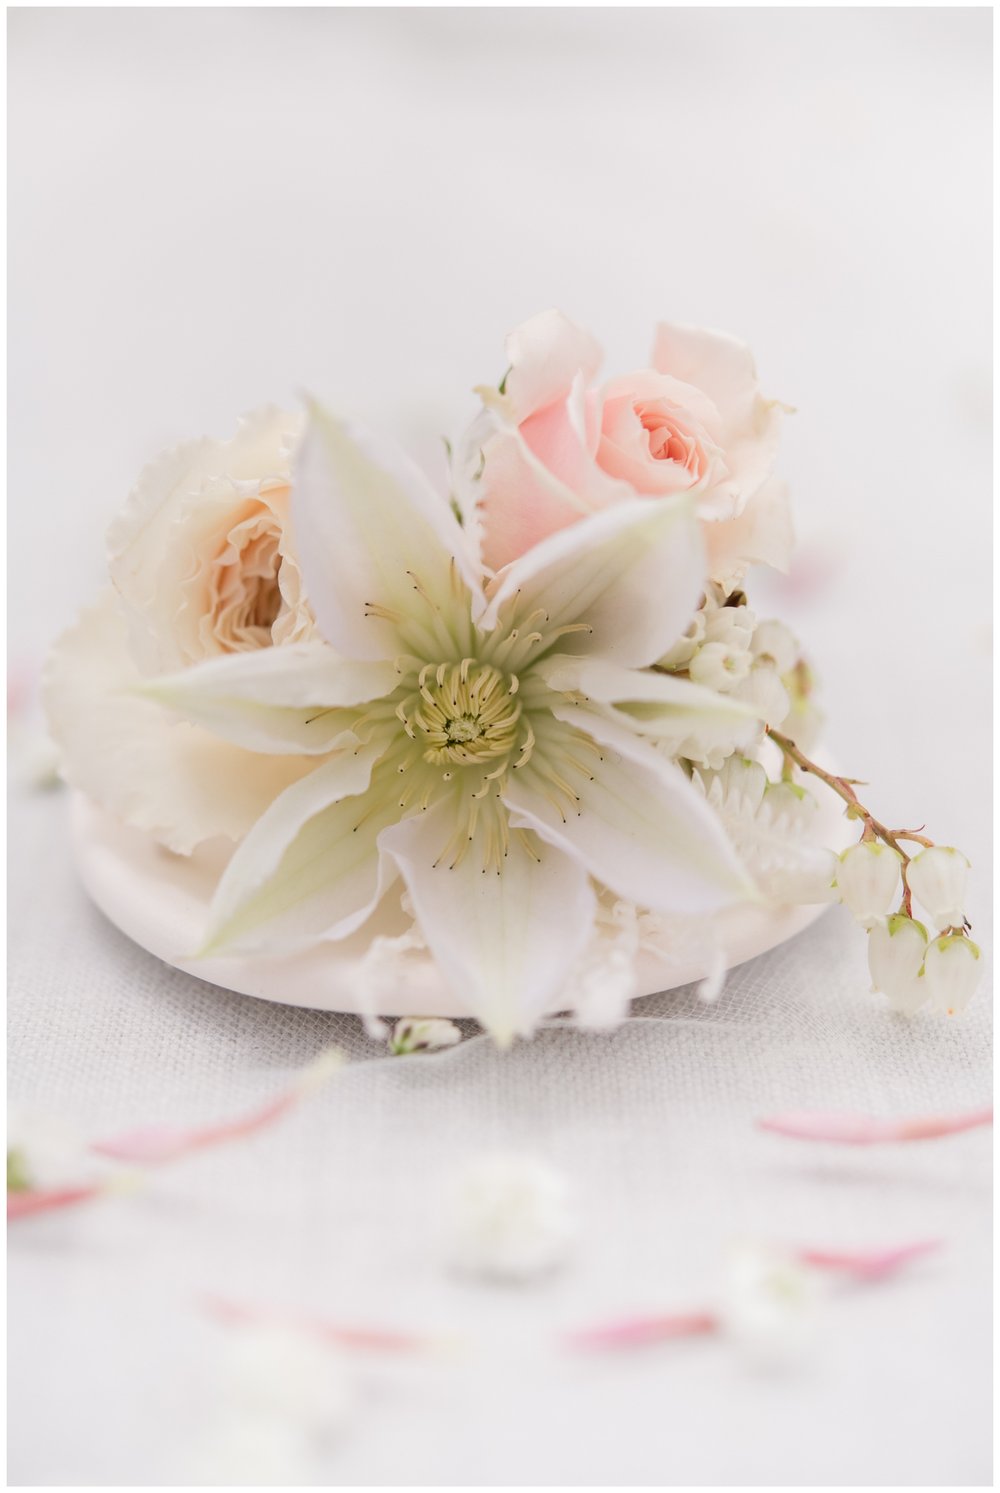 white floral petal in white ceramic dish